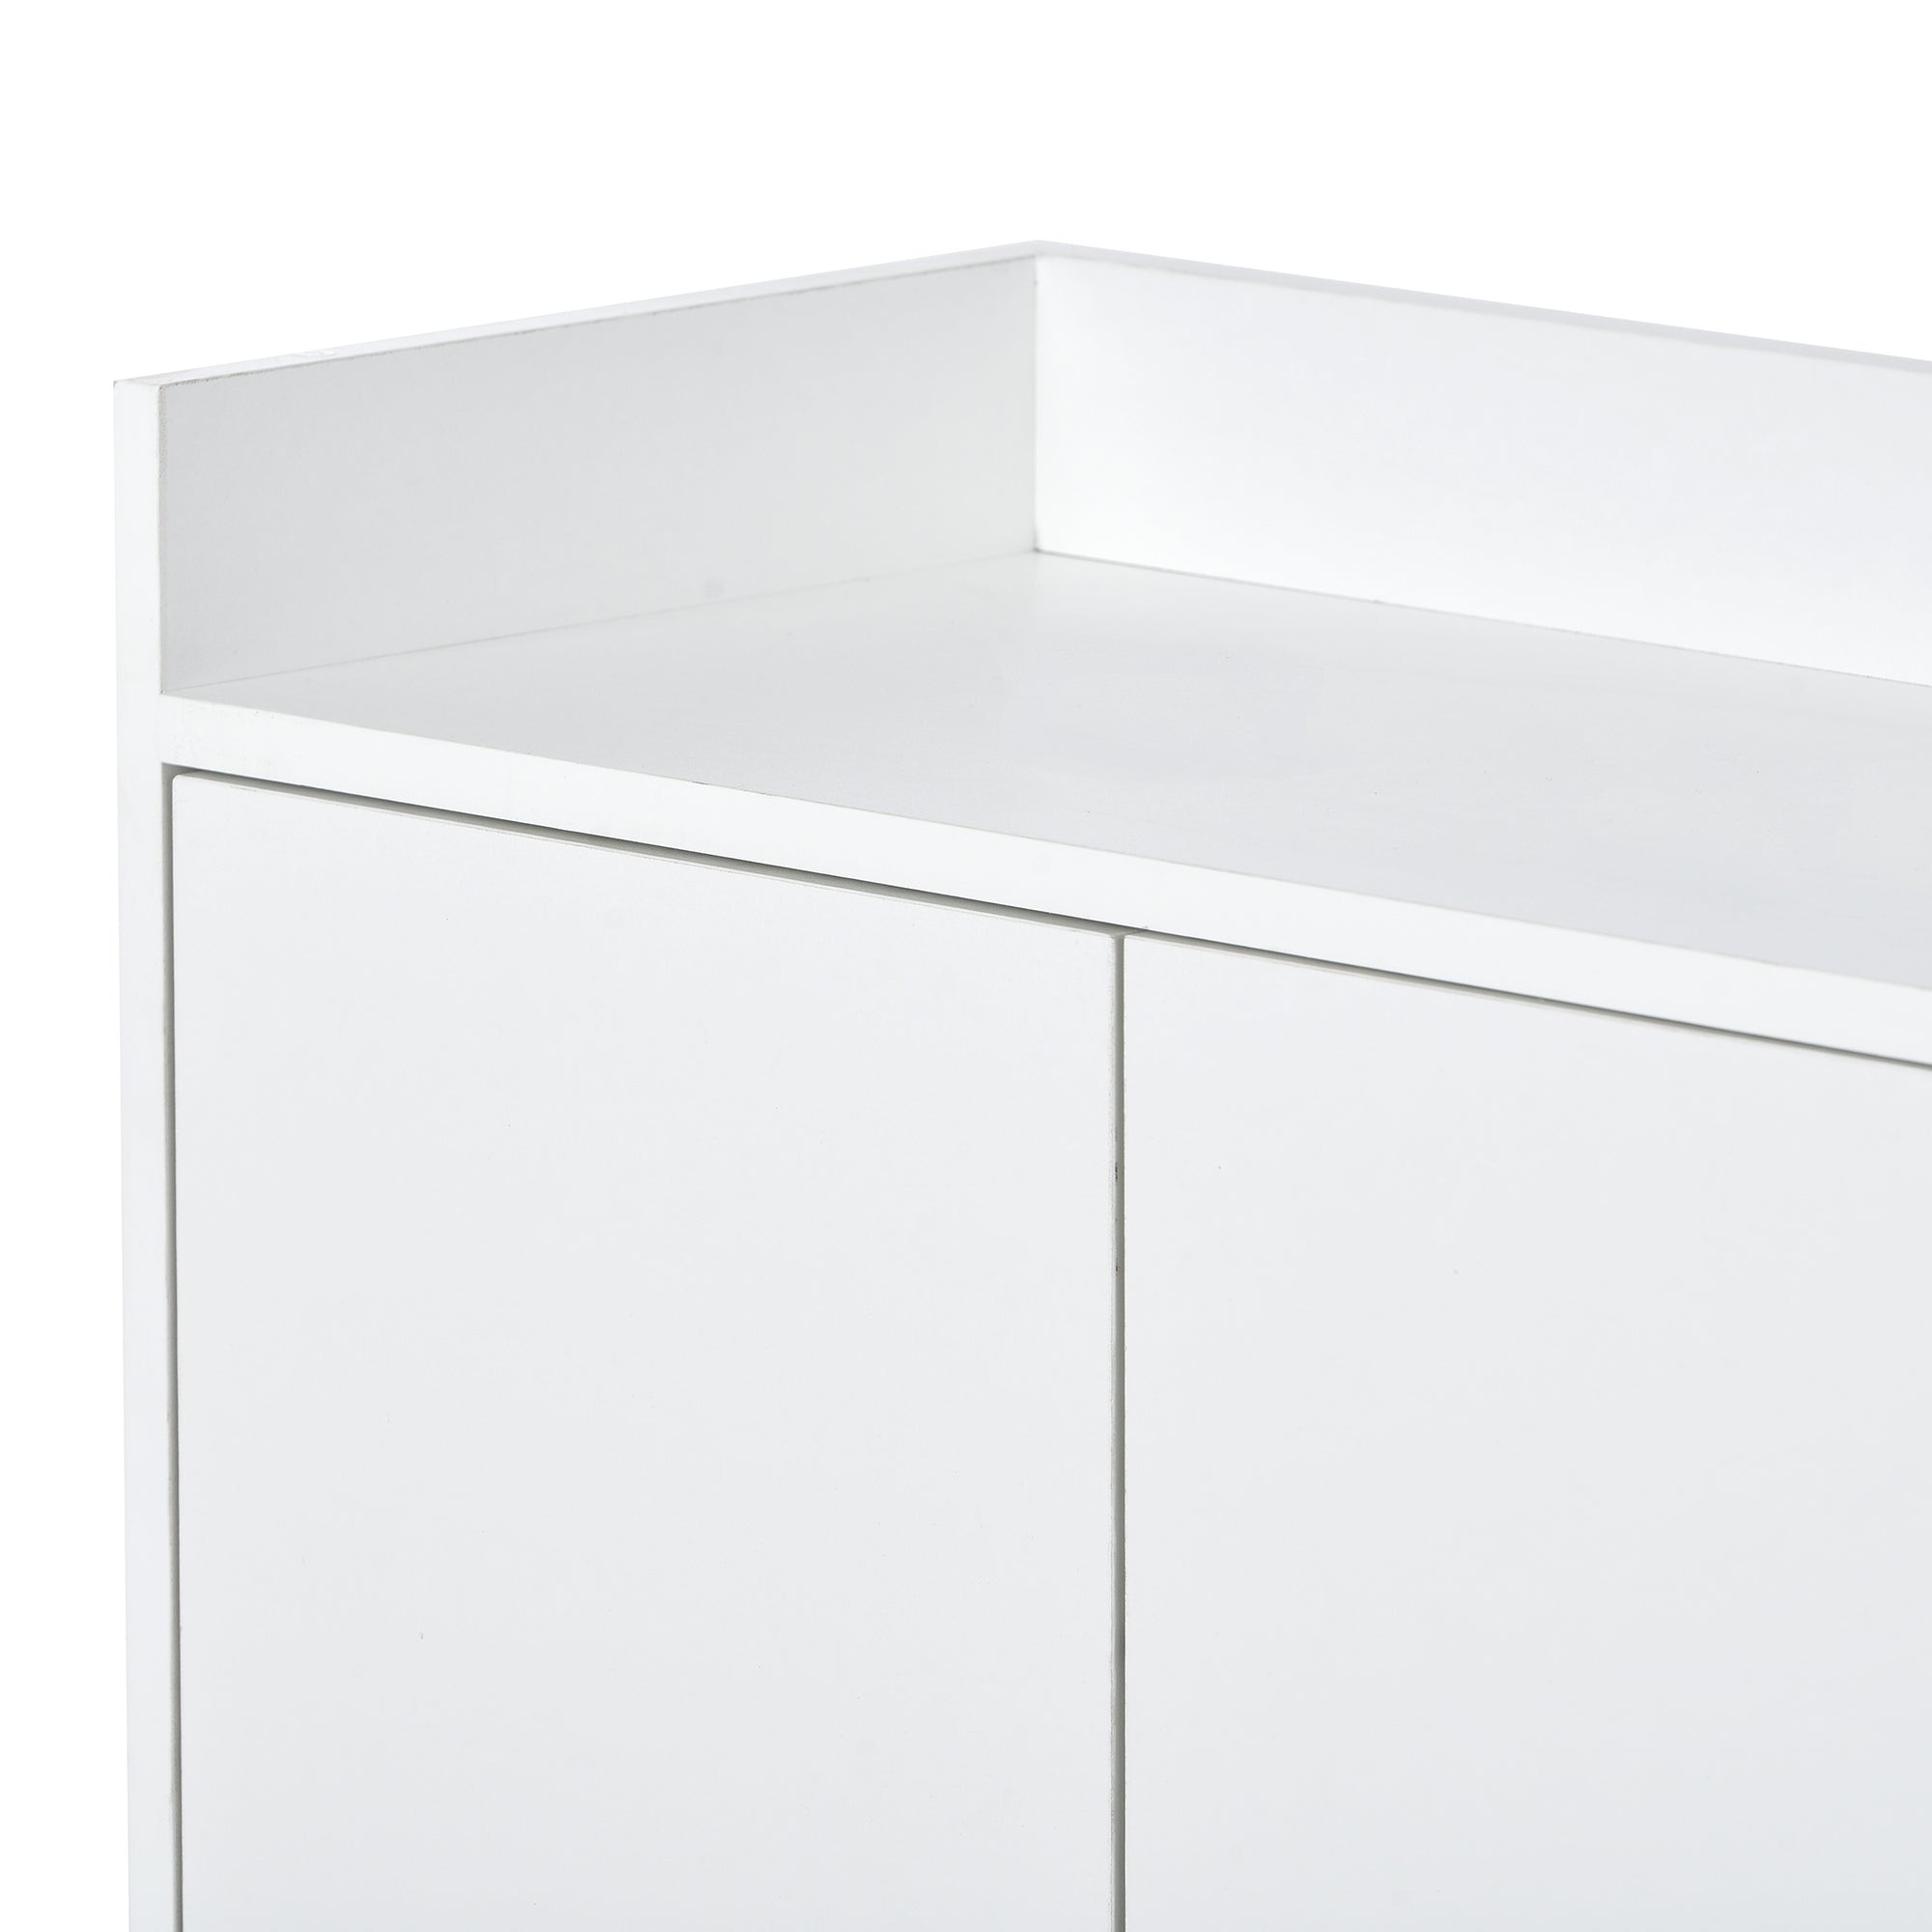 TREXM Sideboard (White)